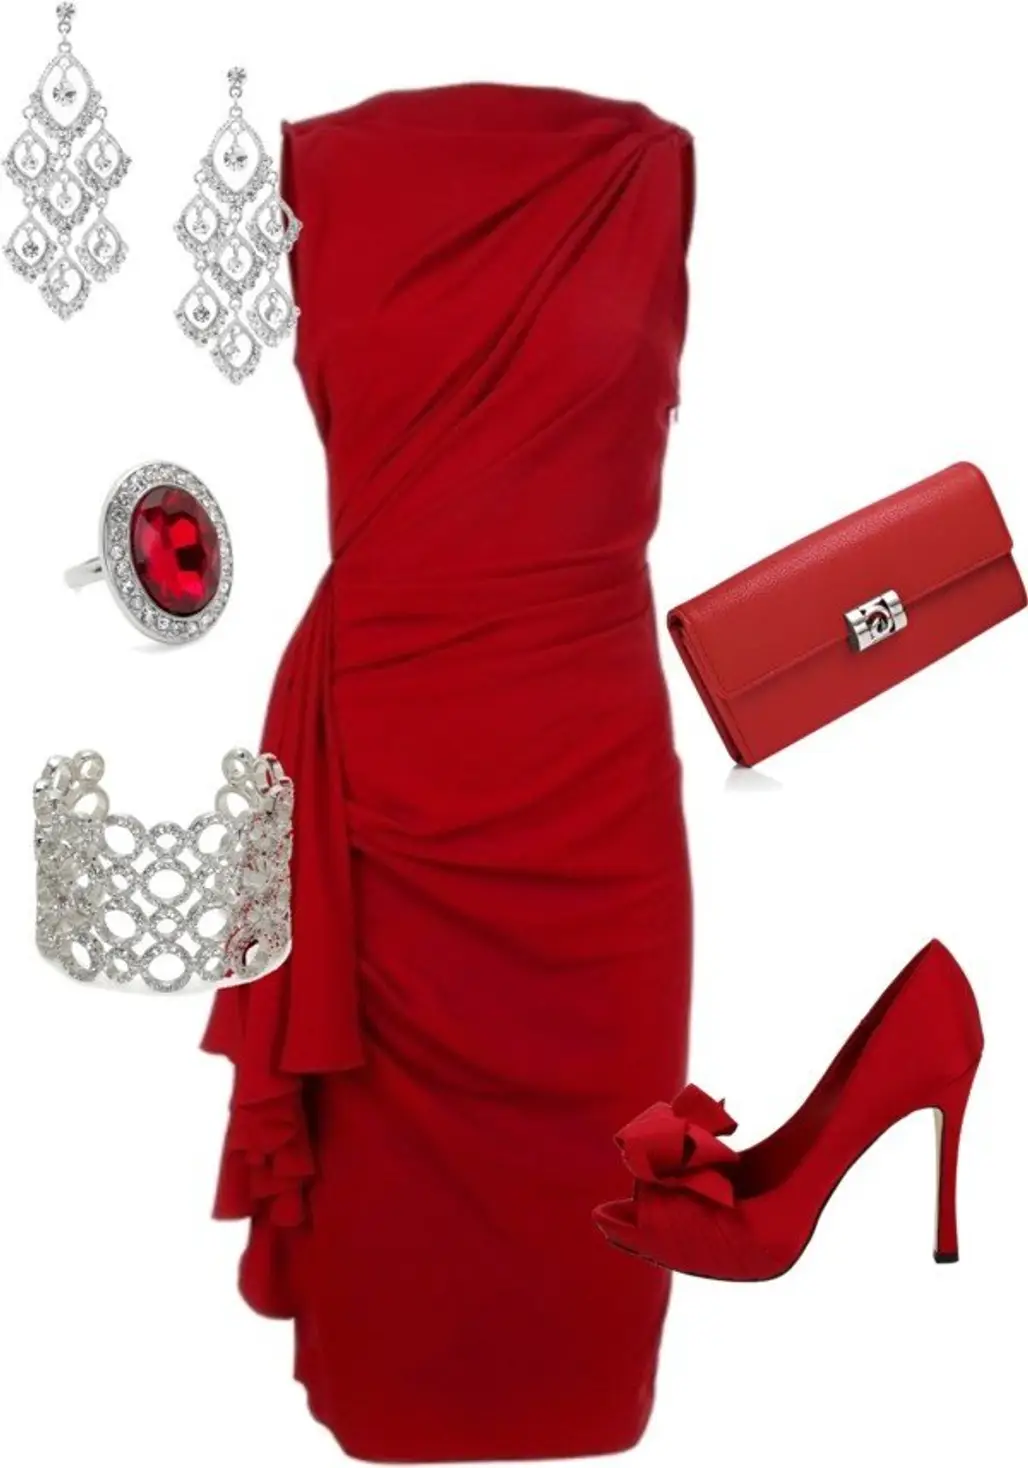 red,clothing,dress,sleeve,maroon,